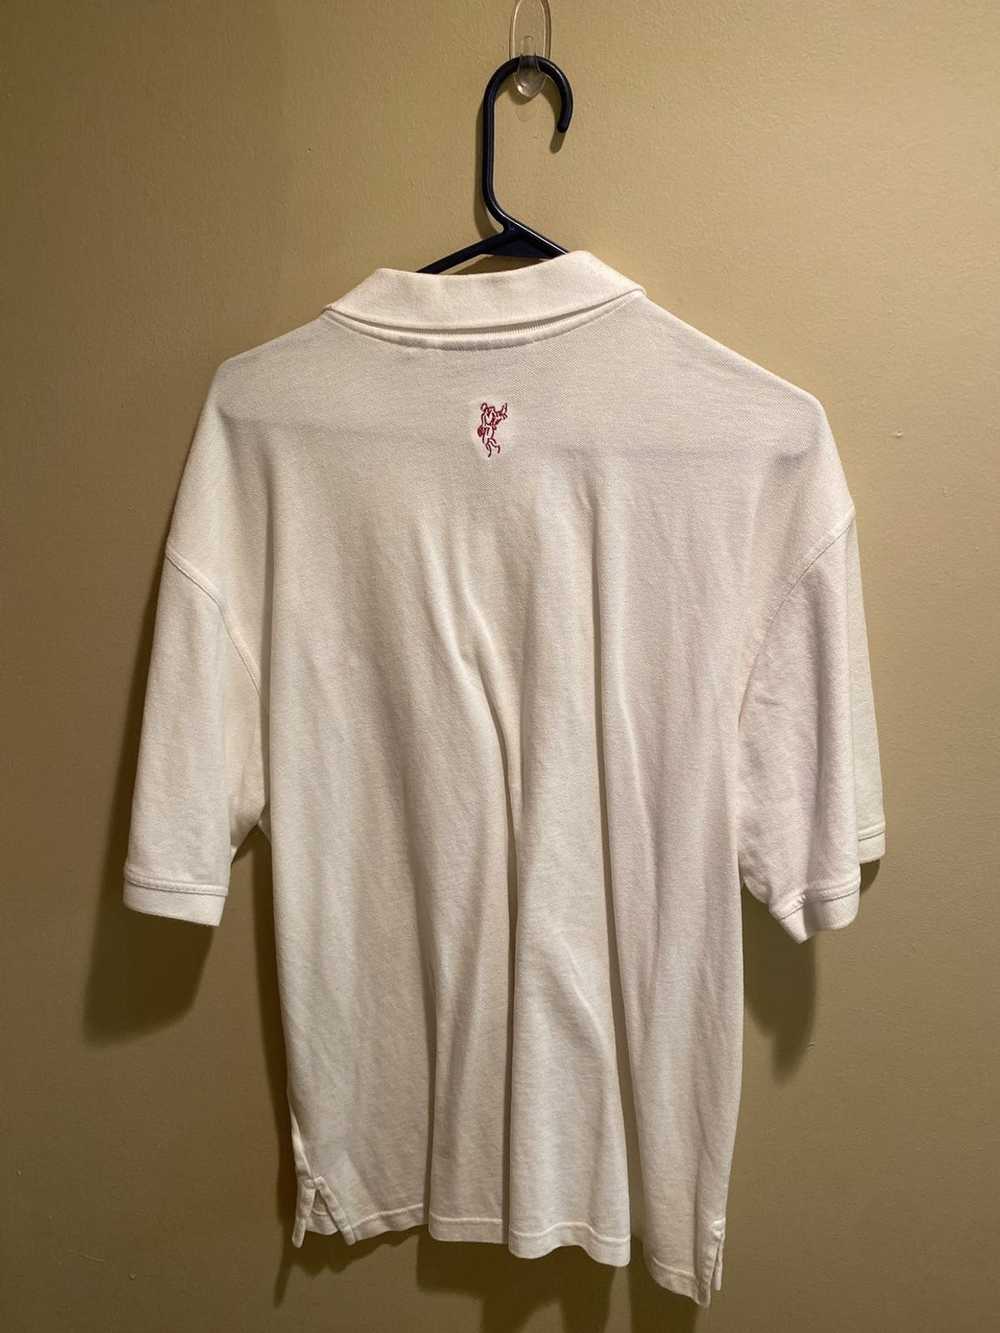 Ashworth Alabama Vintage Collared Shirt - image 2